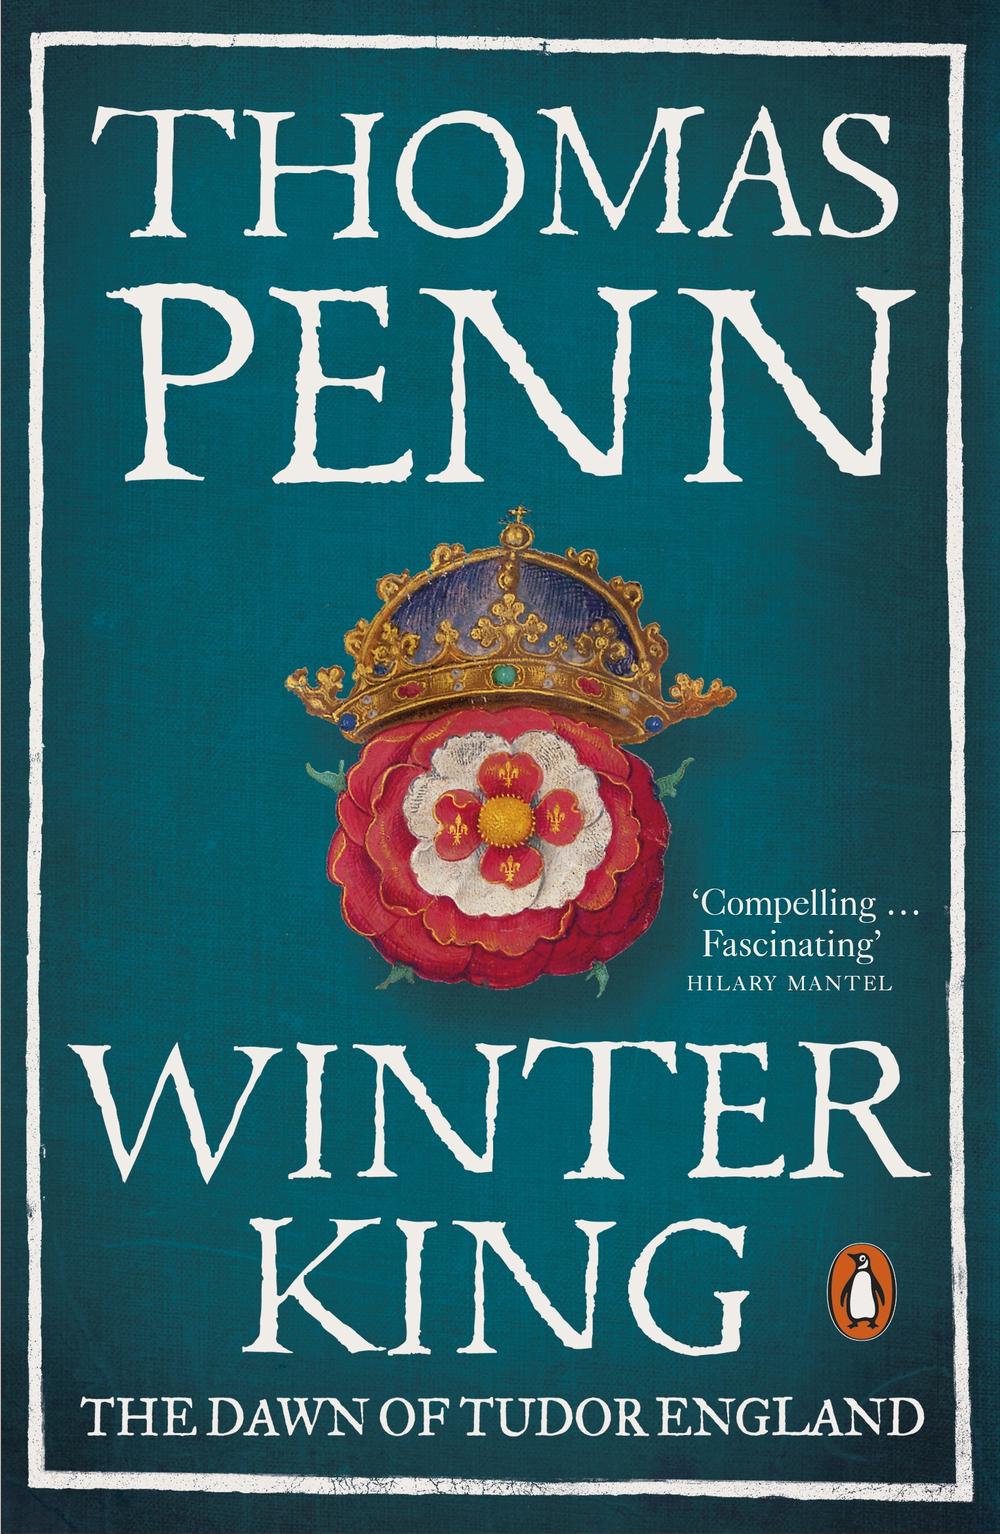 winter king by thomas penn